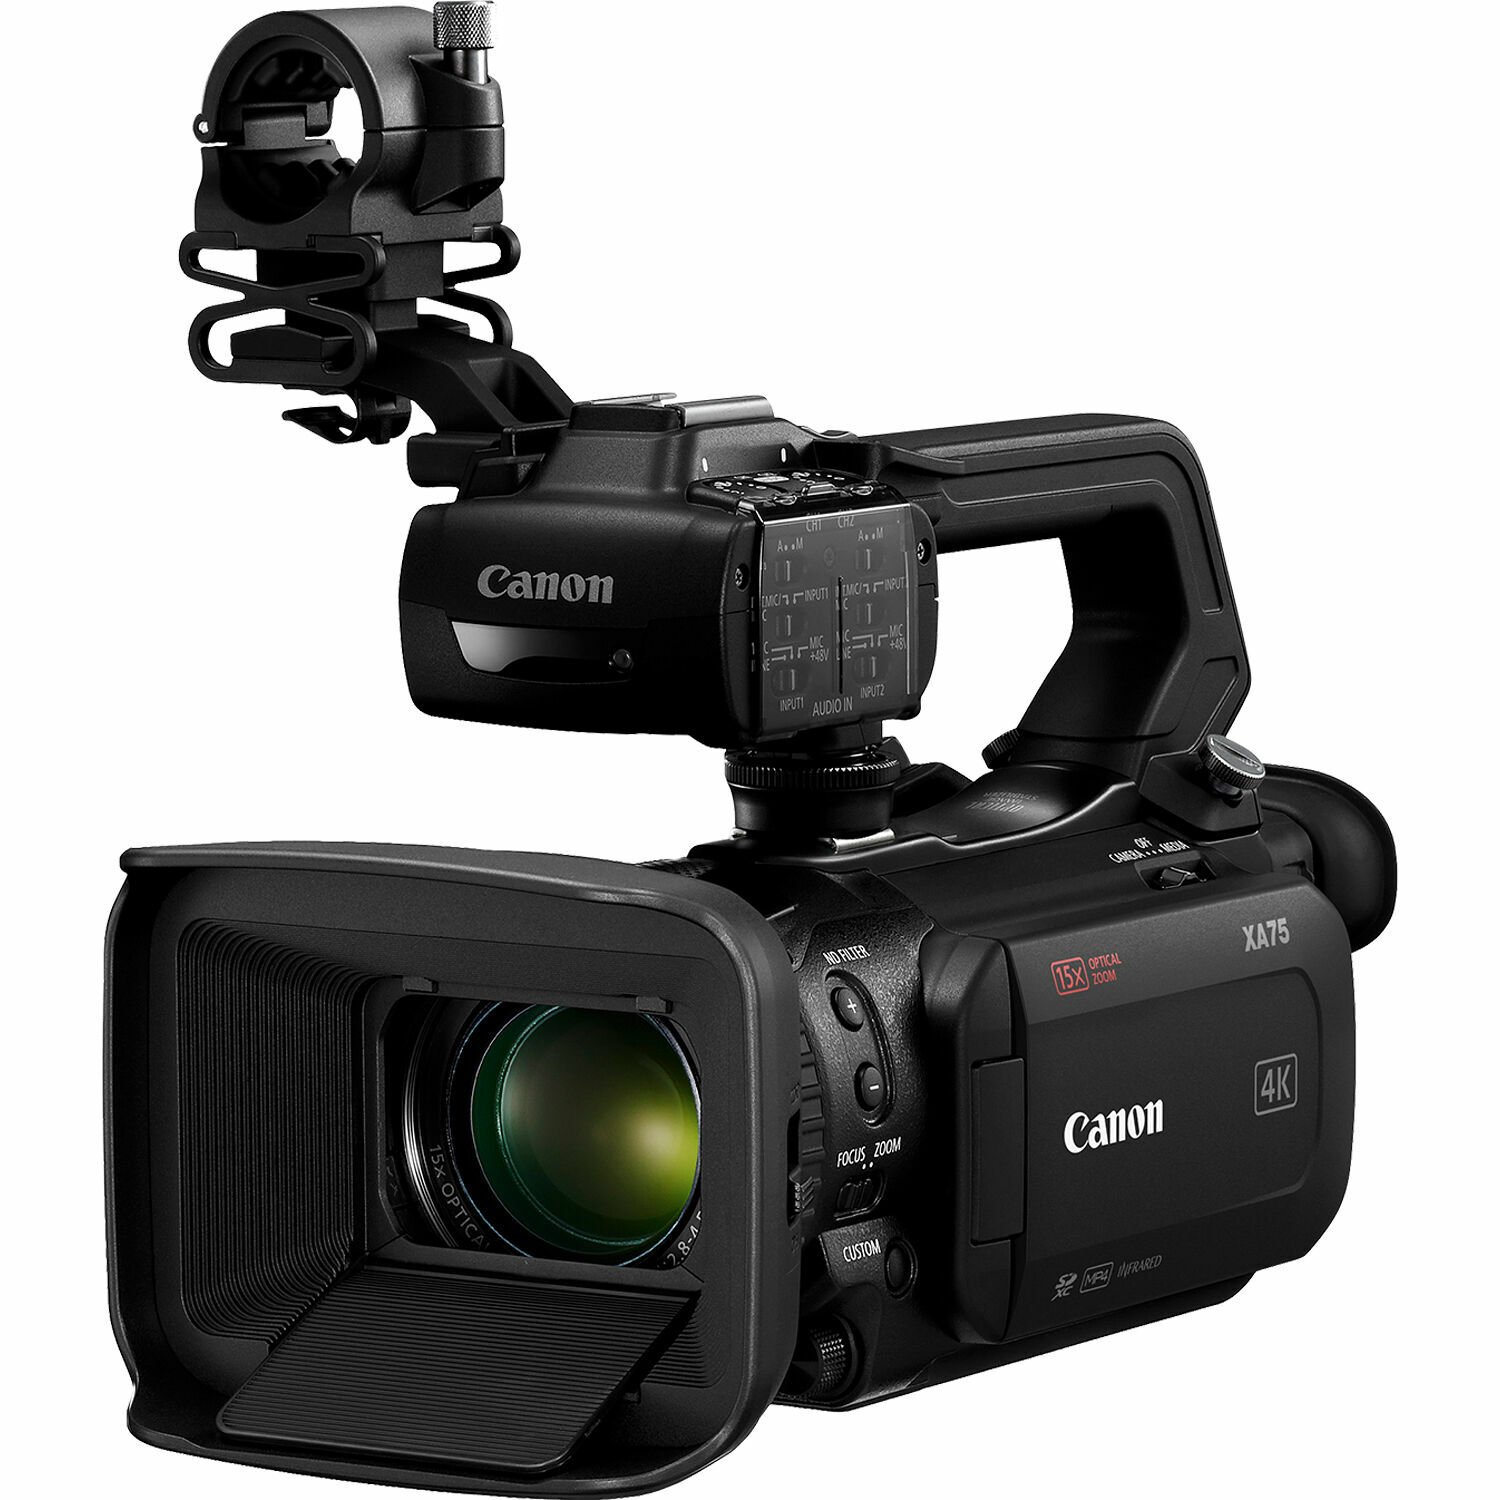 Canon XA75 EMEA UHD 4K Video Kamera(HDMI&SDI)